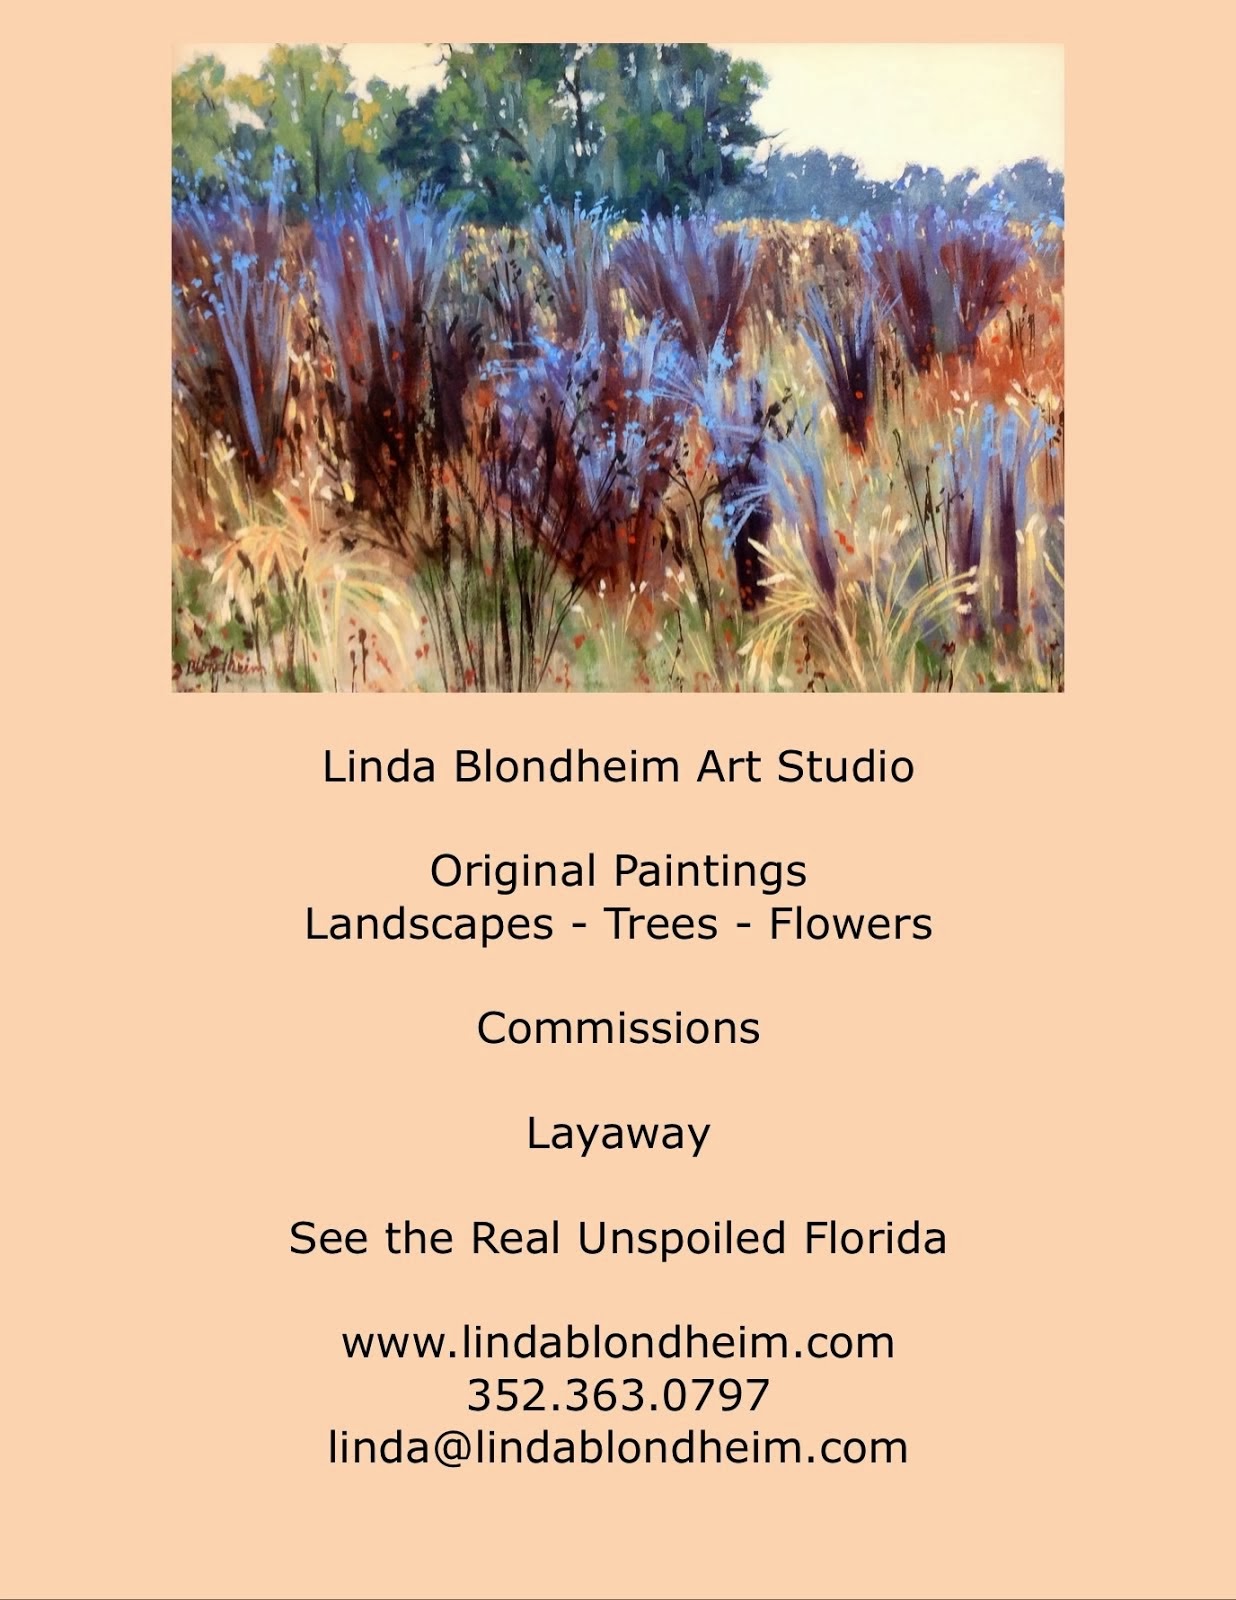 Linda Blondheim Art Studio